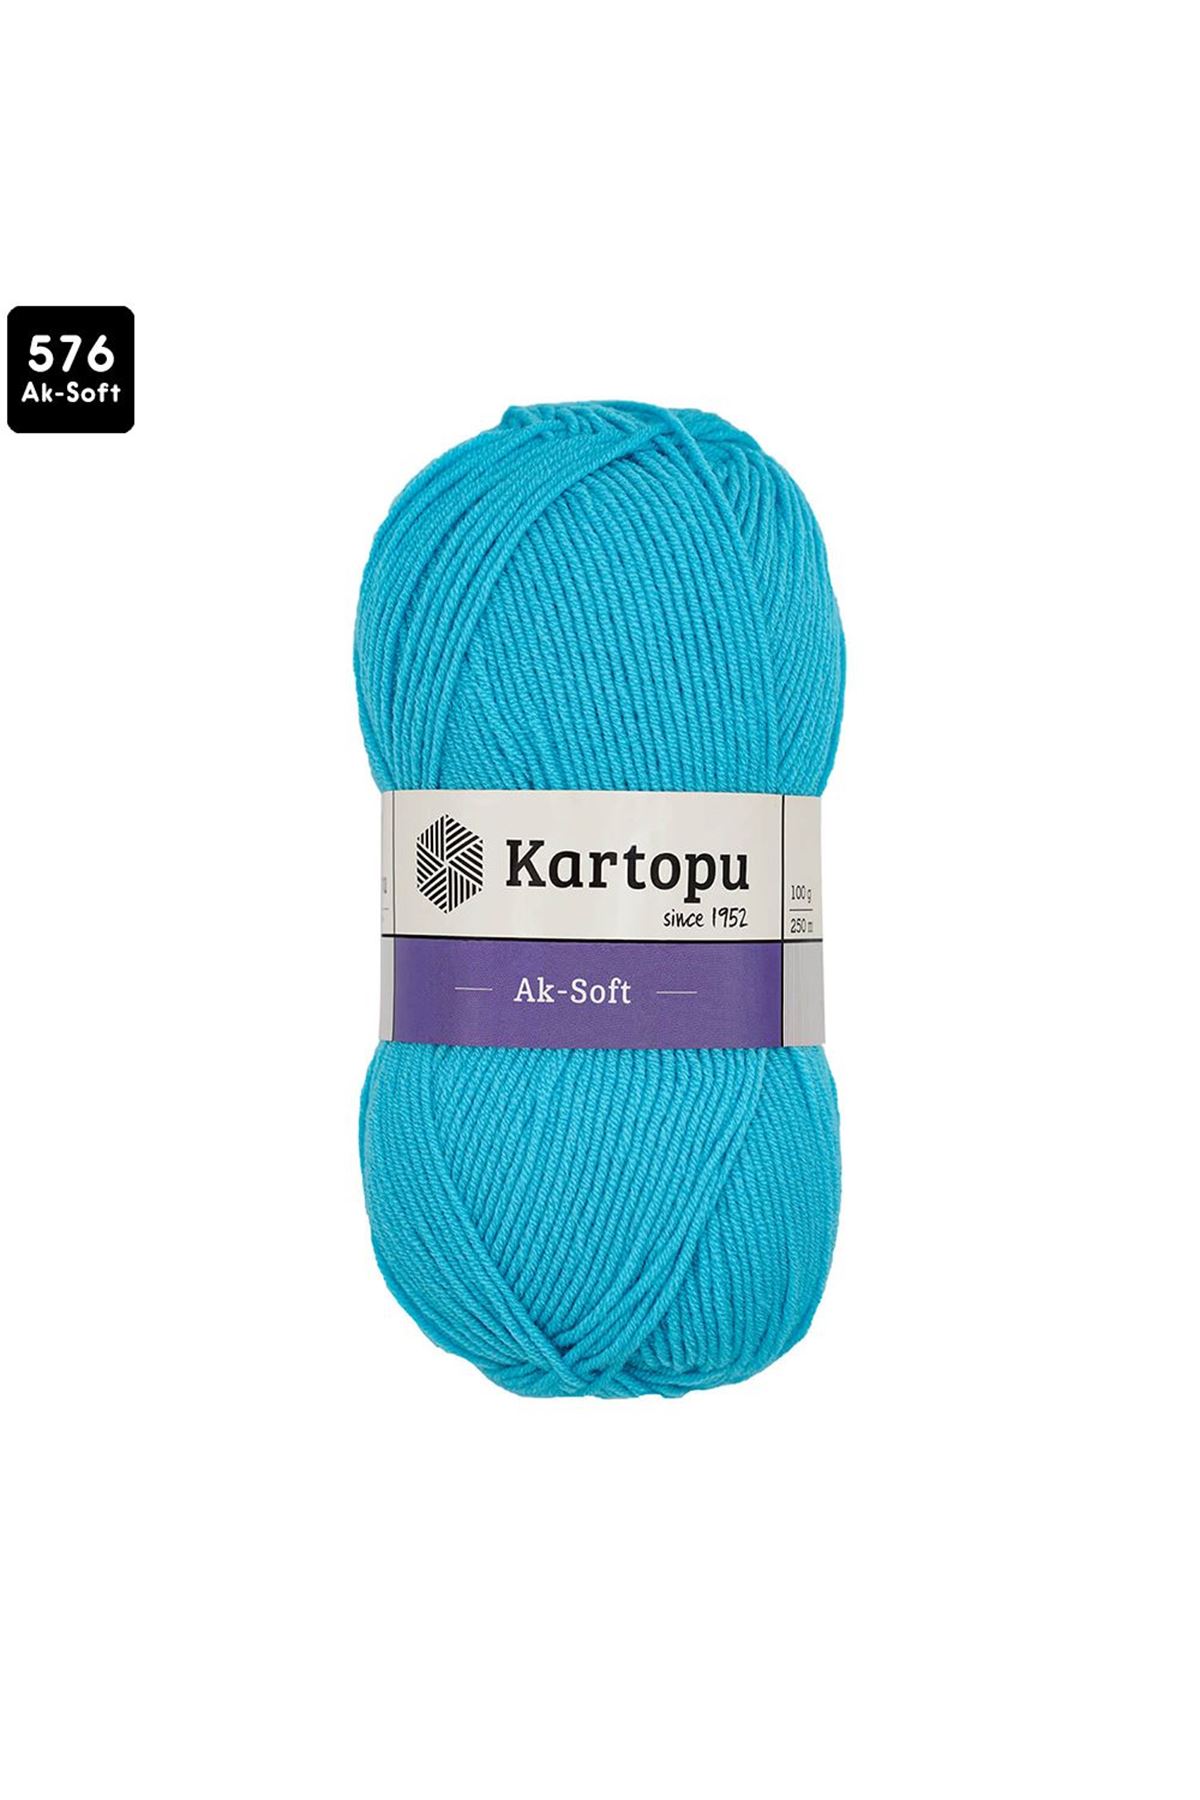 Kartopu Ak-Soft Renk No:576